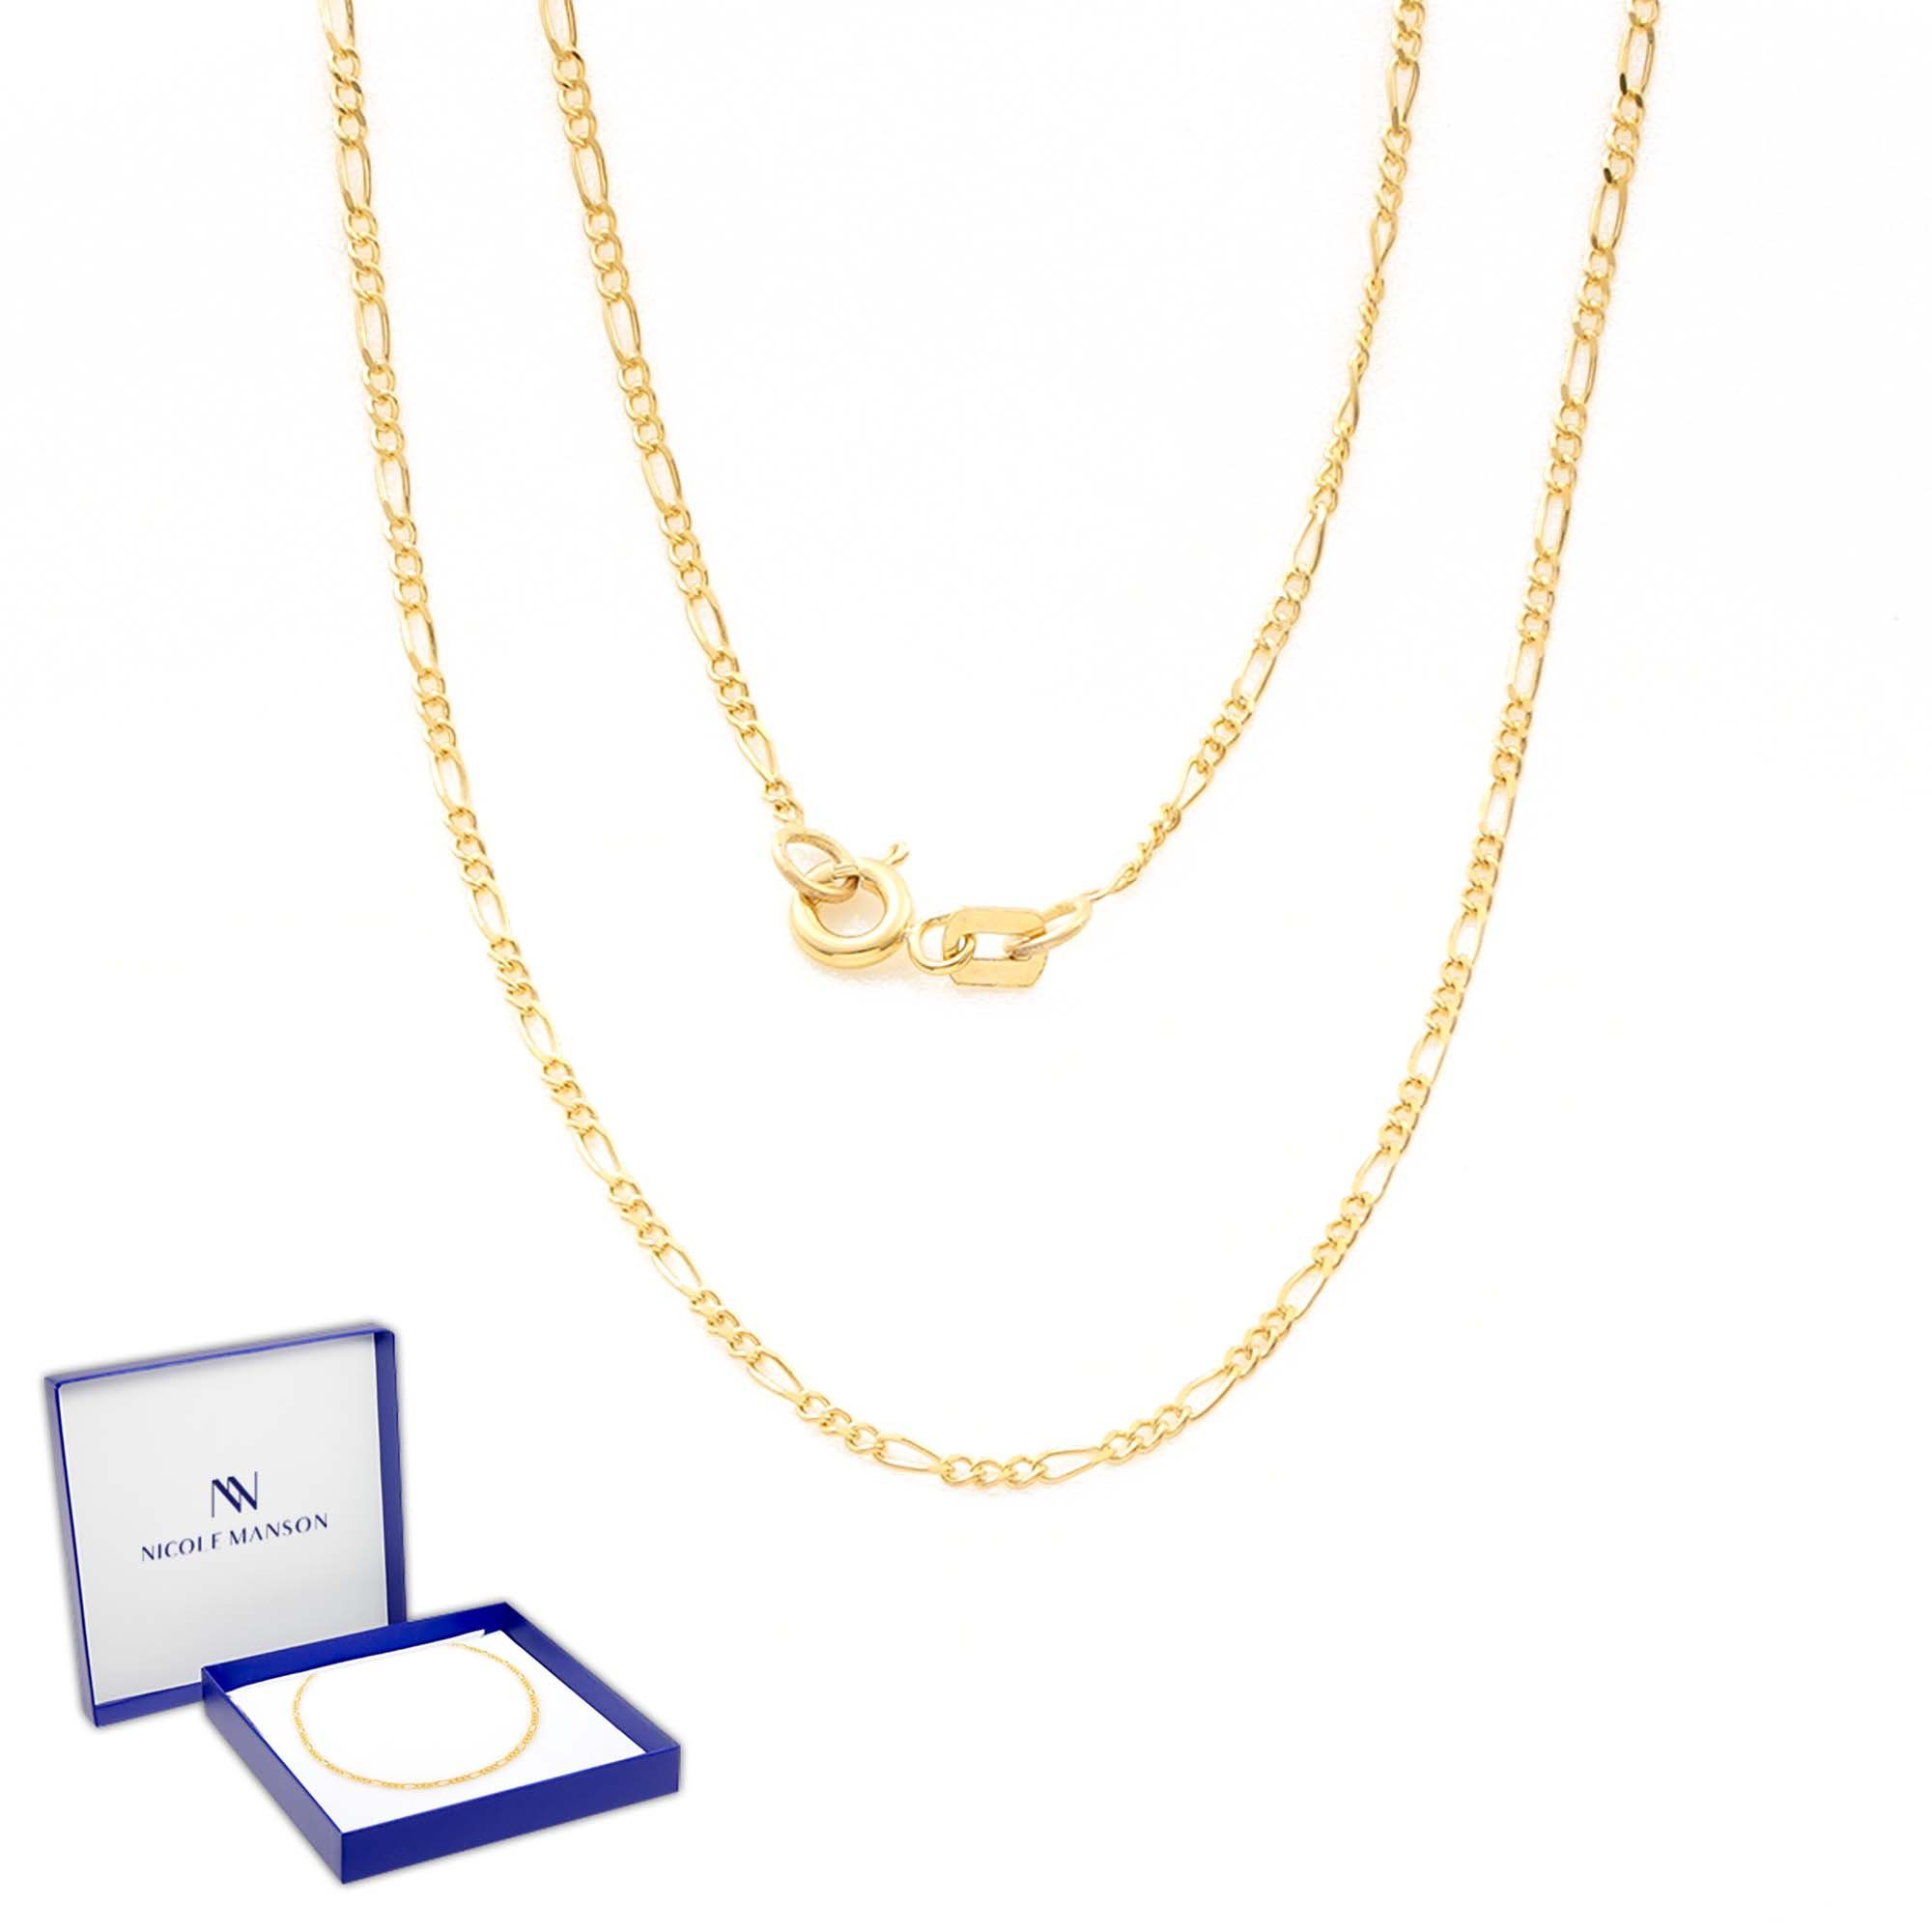 Nicole Manson Goldkette 333 Gold Ketten Figaro Halskette 8K 40cm - 60cm, Figarokette